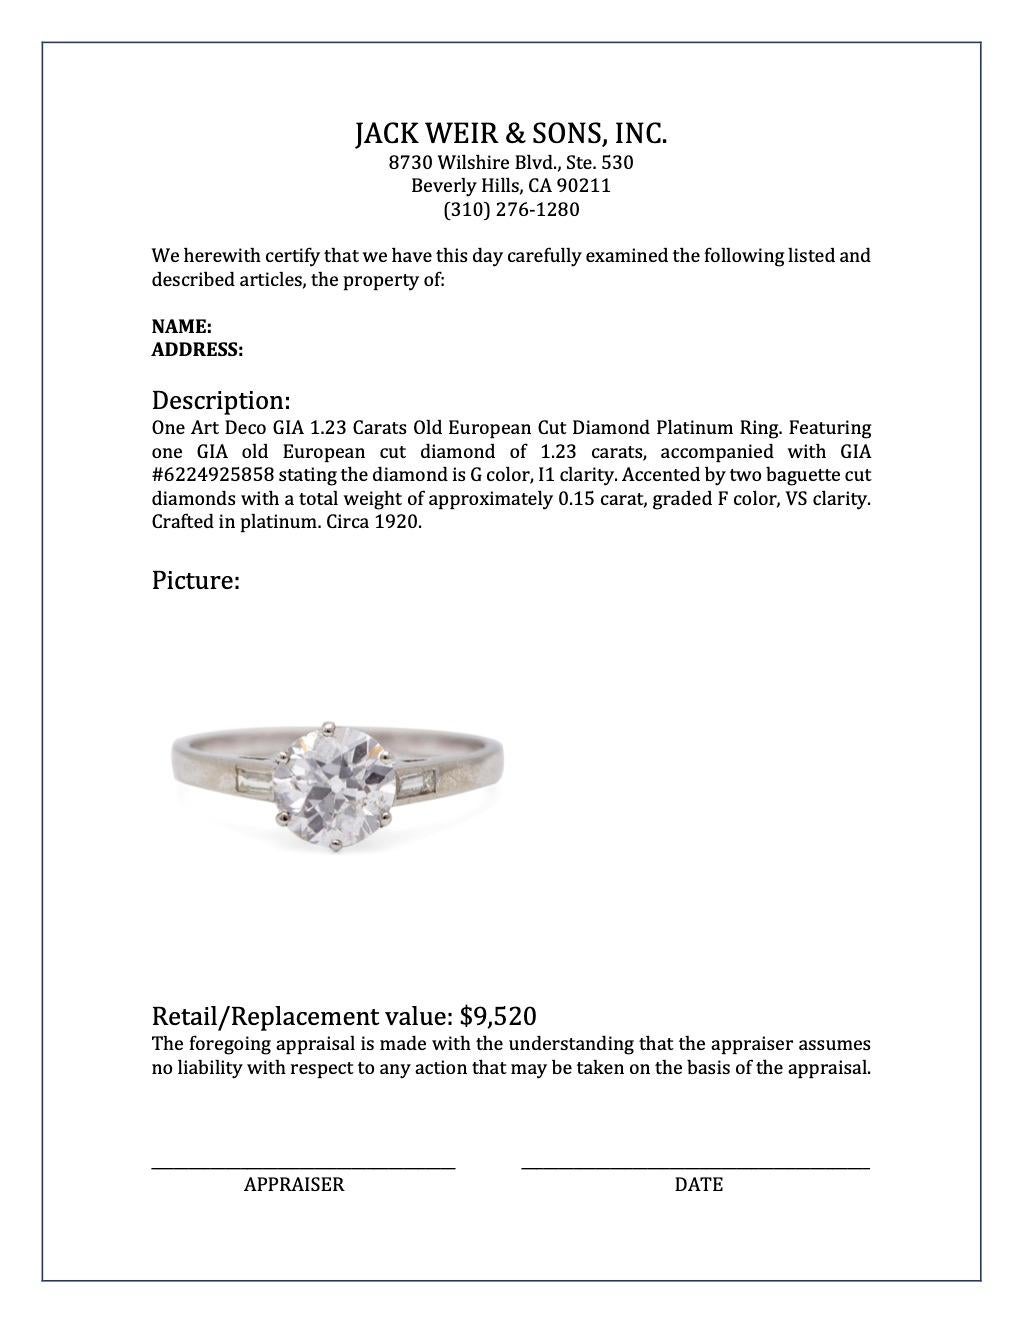 Art Deco GIA 1.23 Carats Old European Cut Diamond Platinum Ring 2